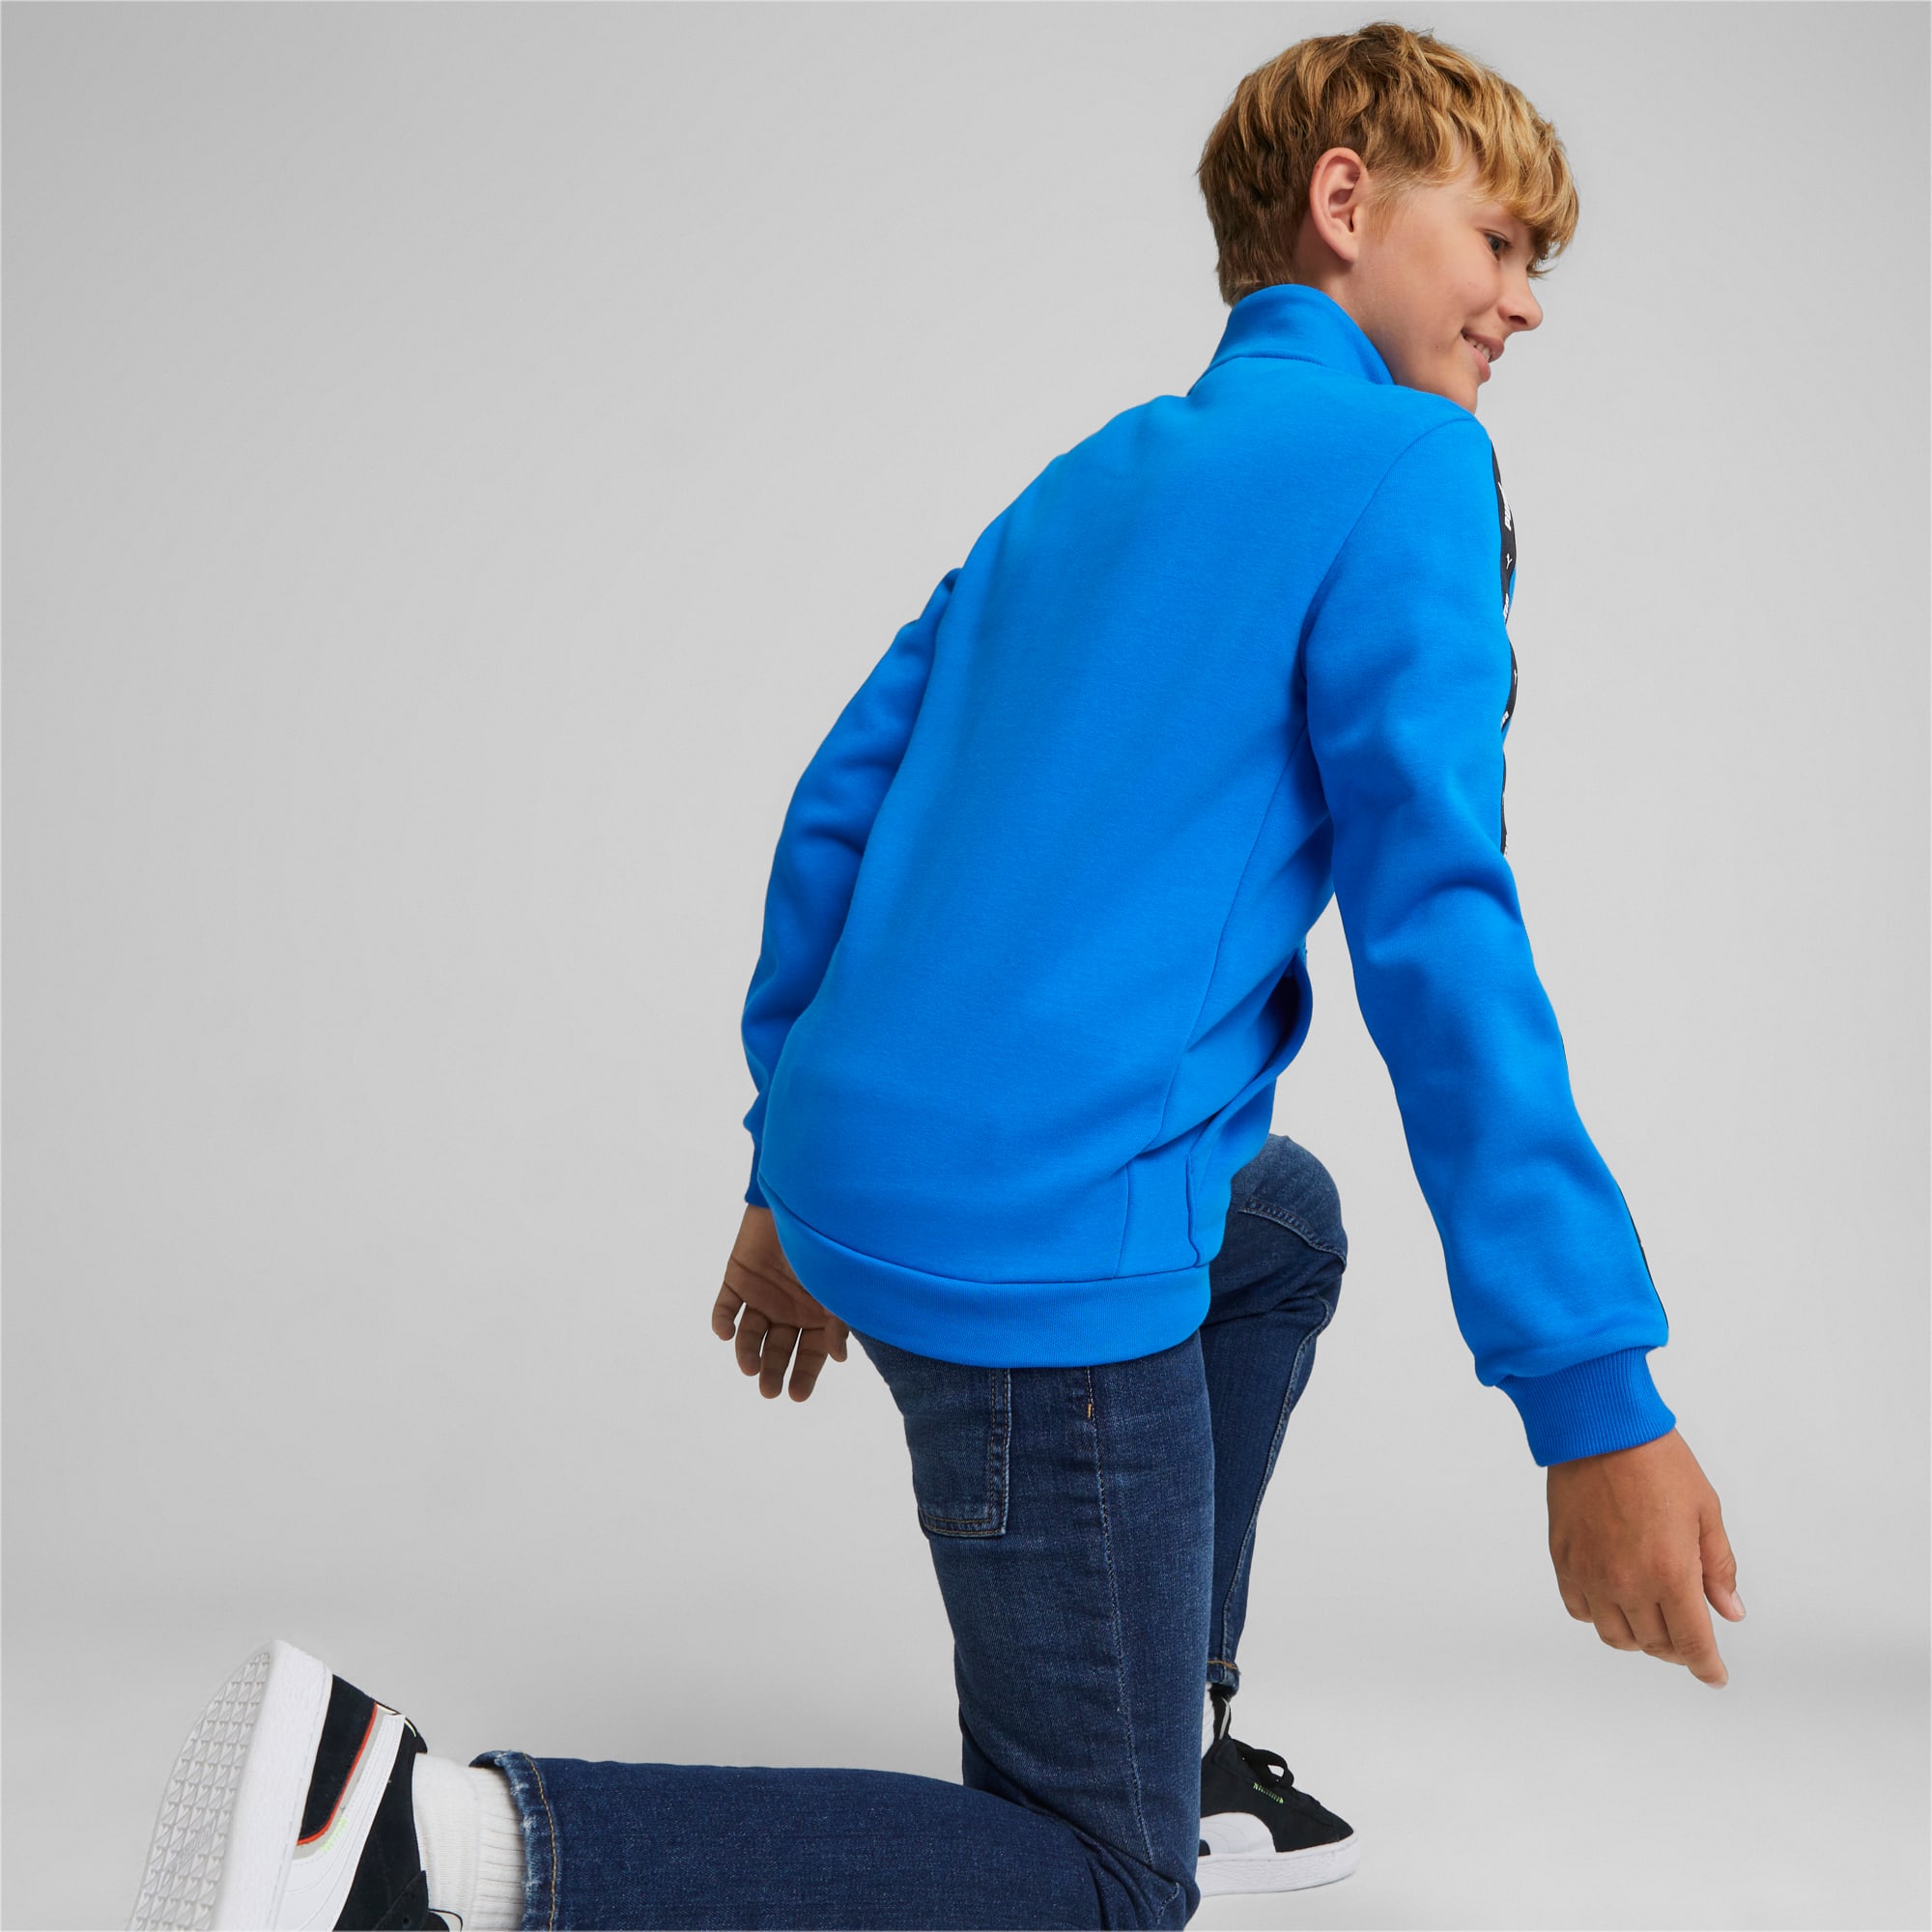 PUMA Tape Jogginganzug Teenager Für Kinder, Blau, Größe: 140, Kleidung